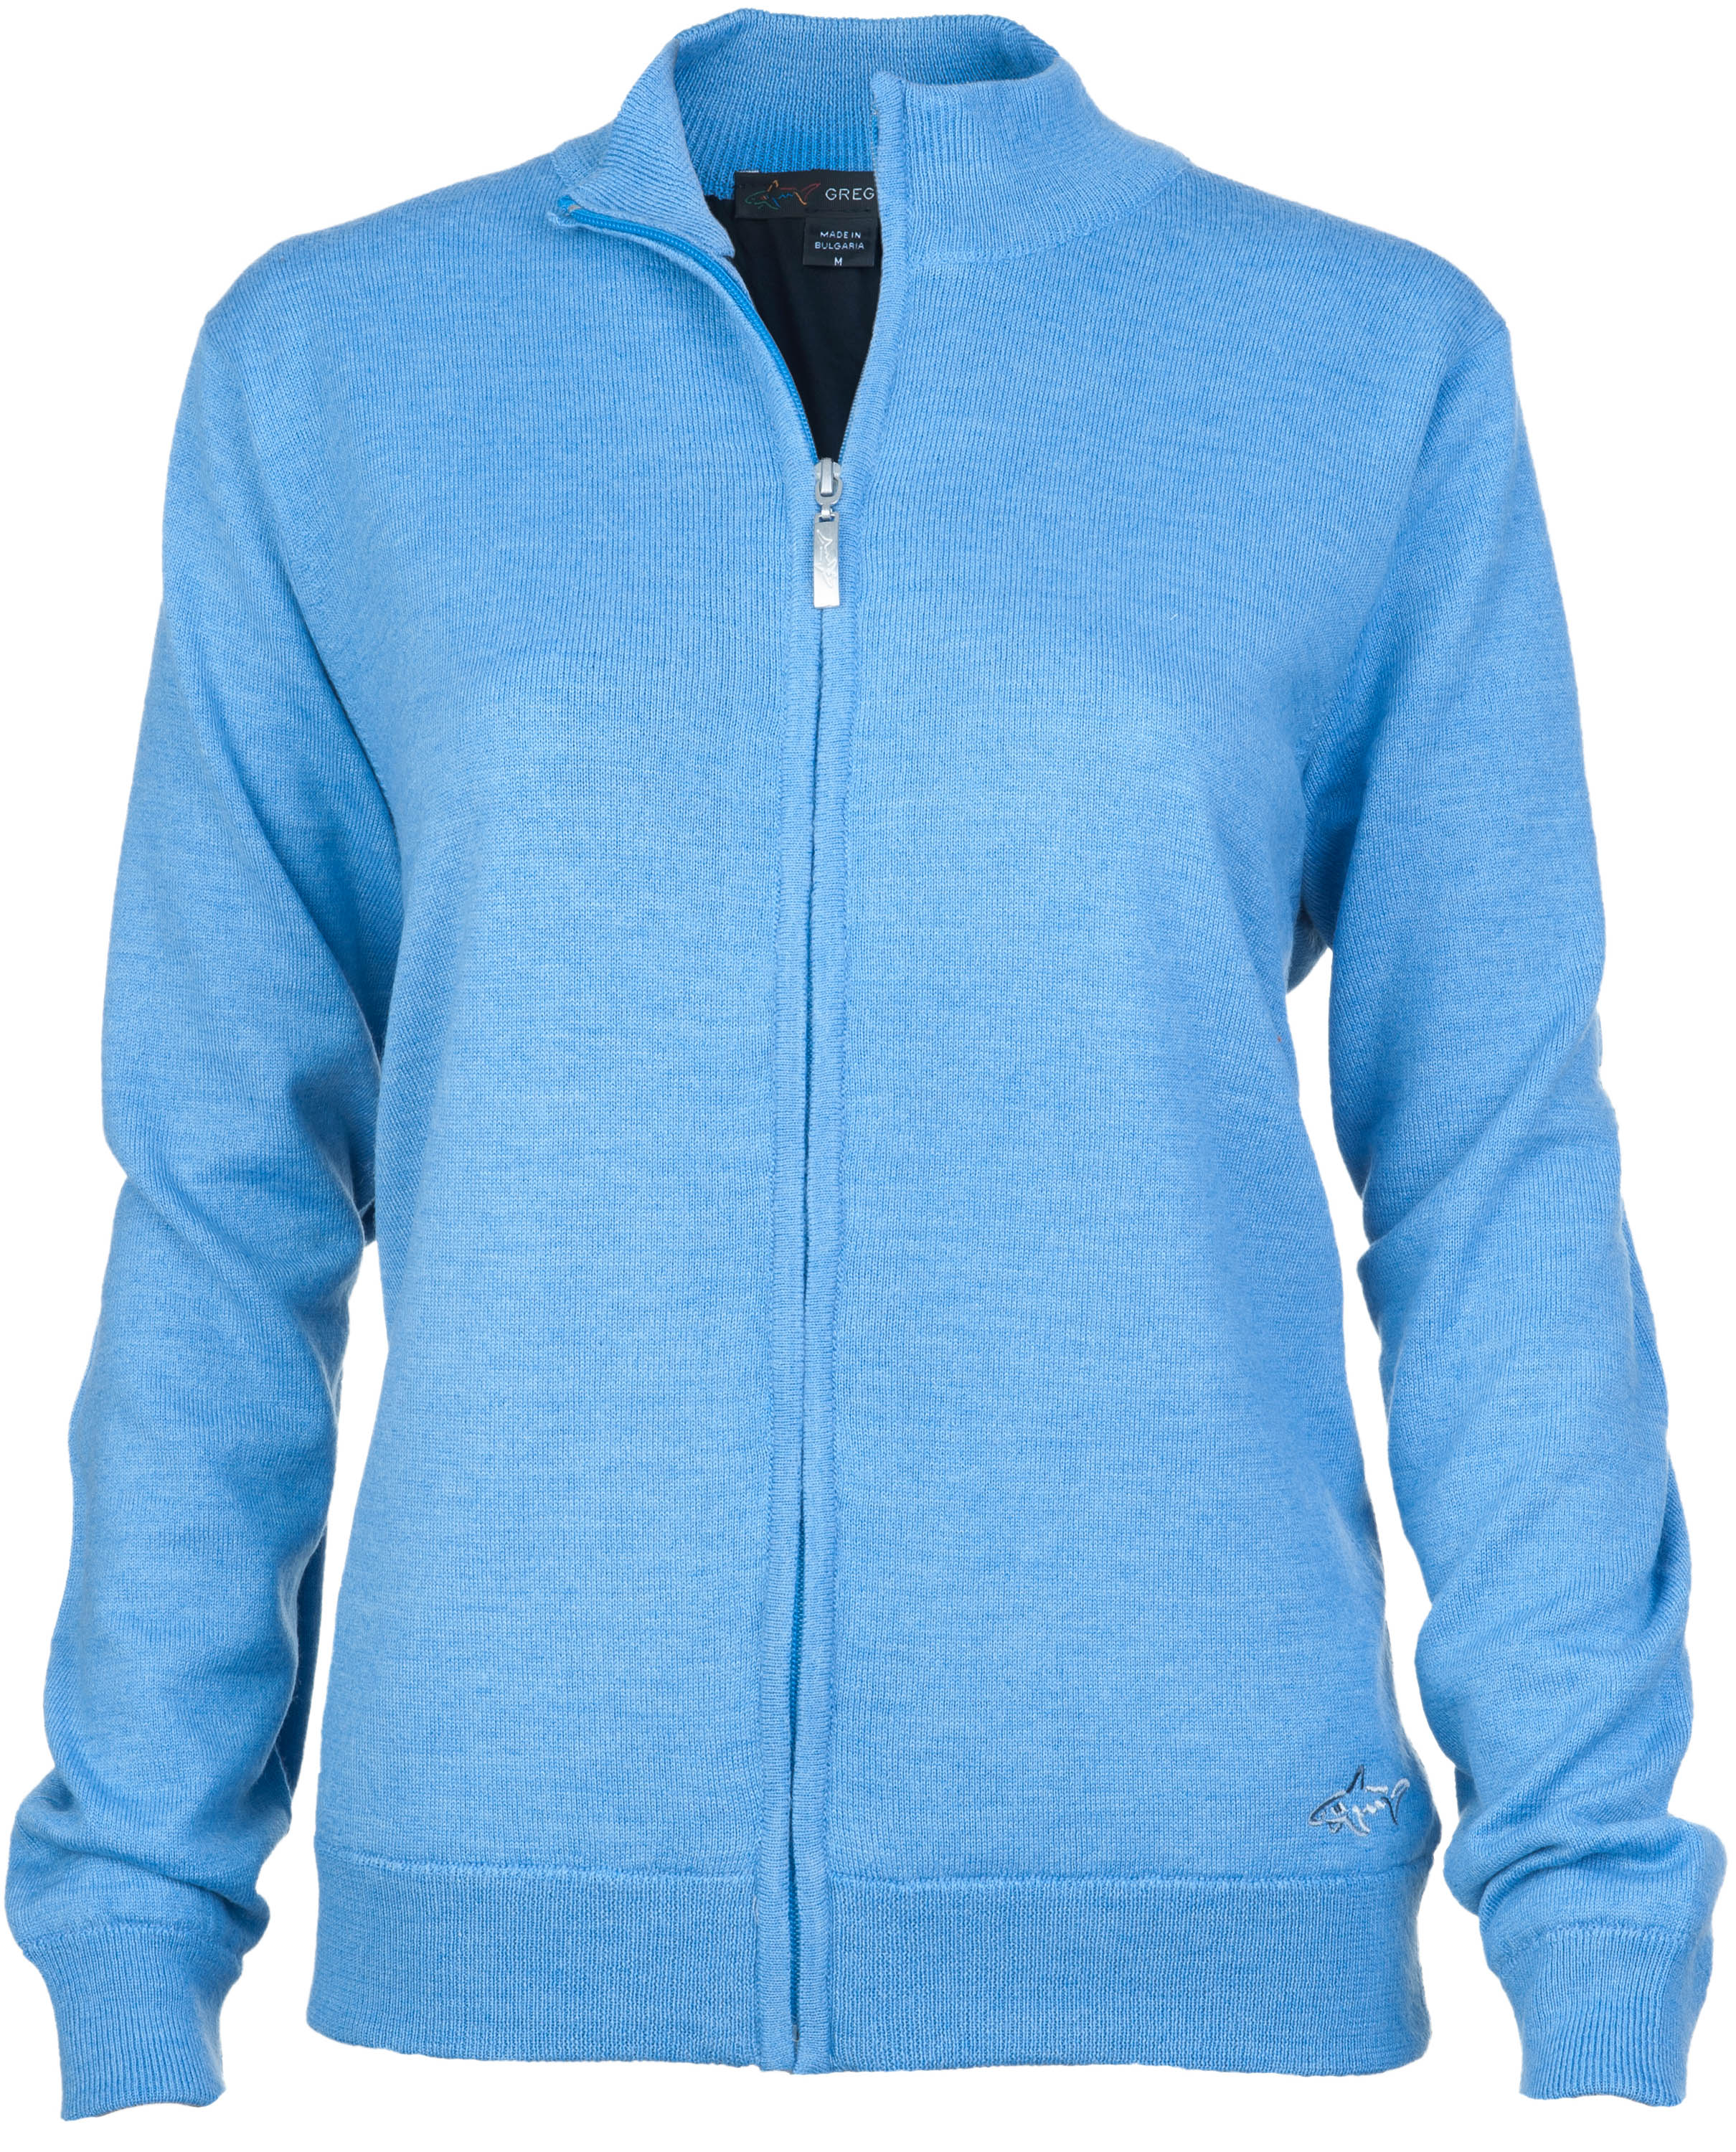 Greg Norman Windbreaker Lined Full-Zip Sweater, polar heather